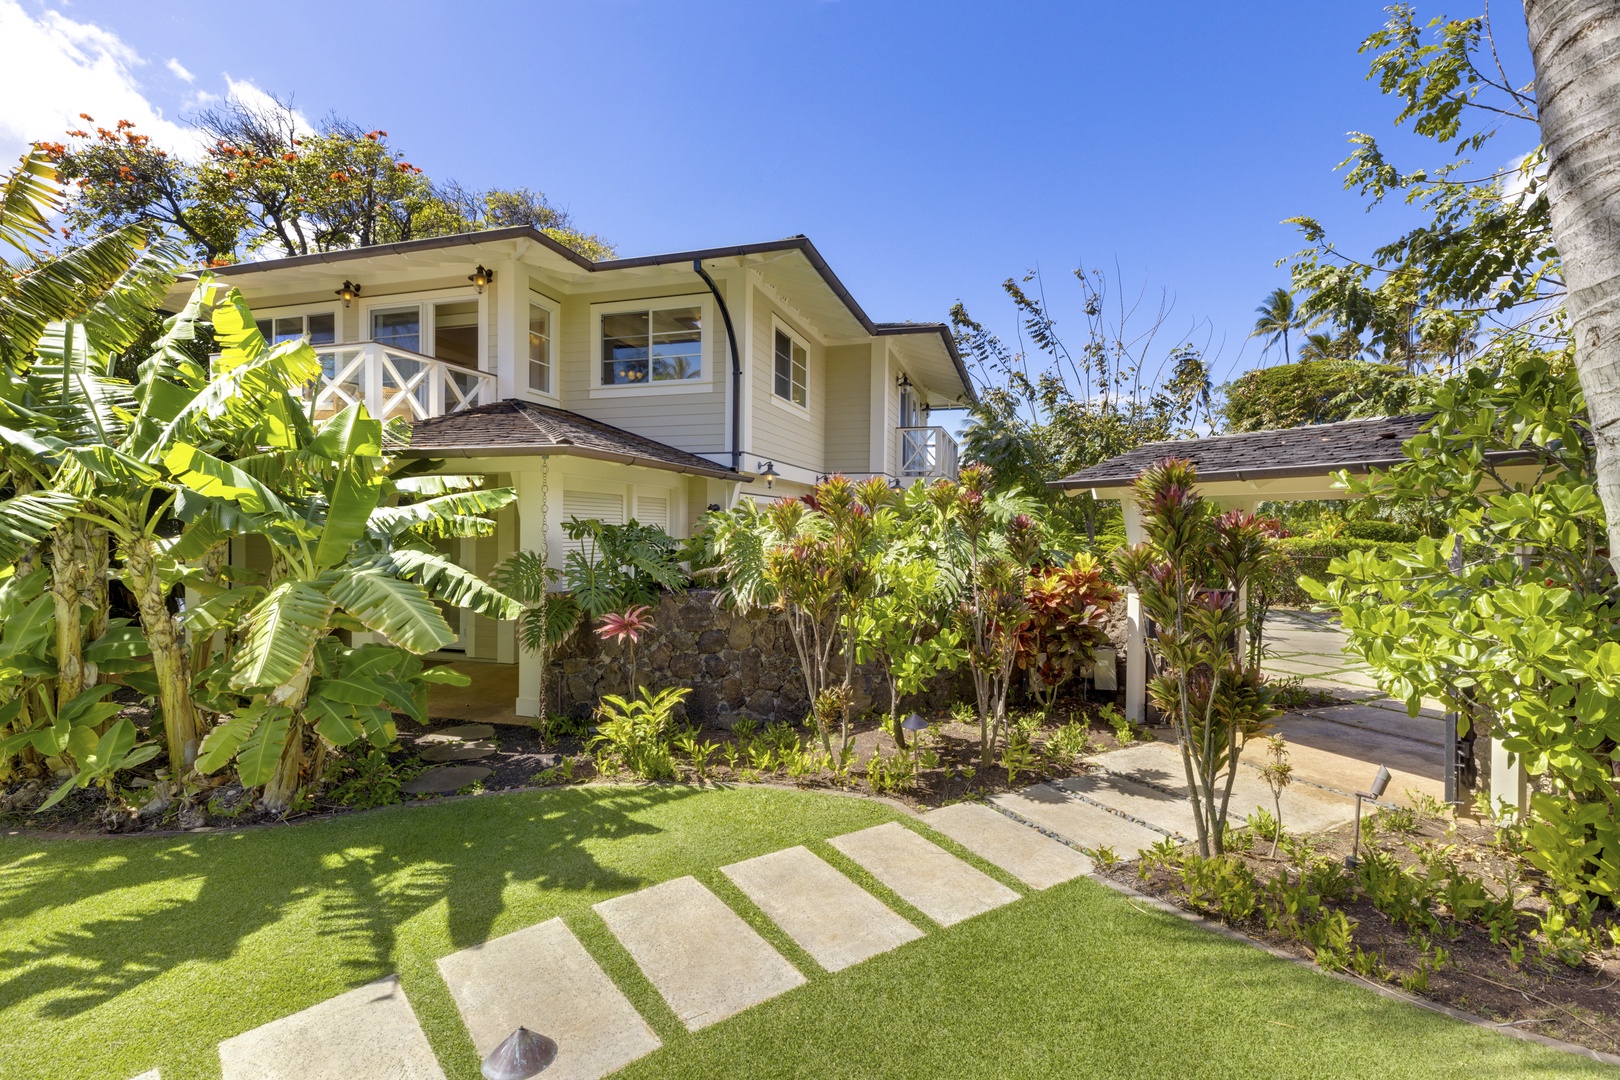 Honolulu Vacation Rentals, Kahala Beachside Estate - Separate Carriage House, above the garage